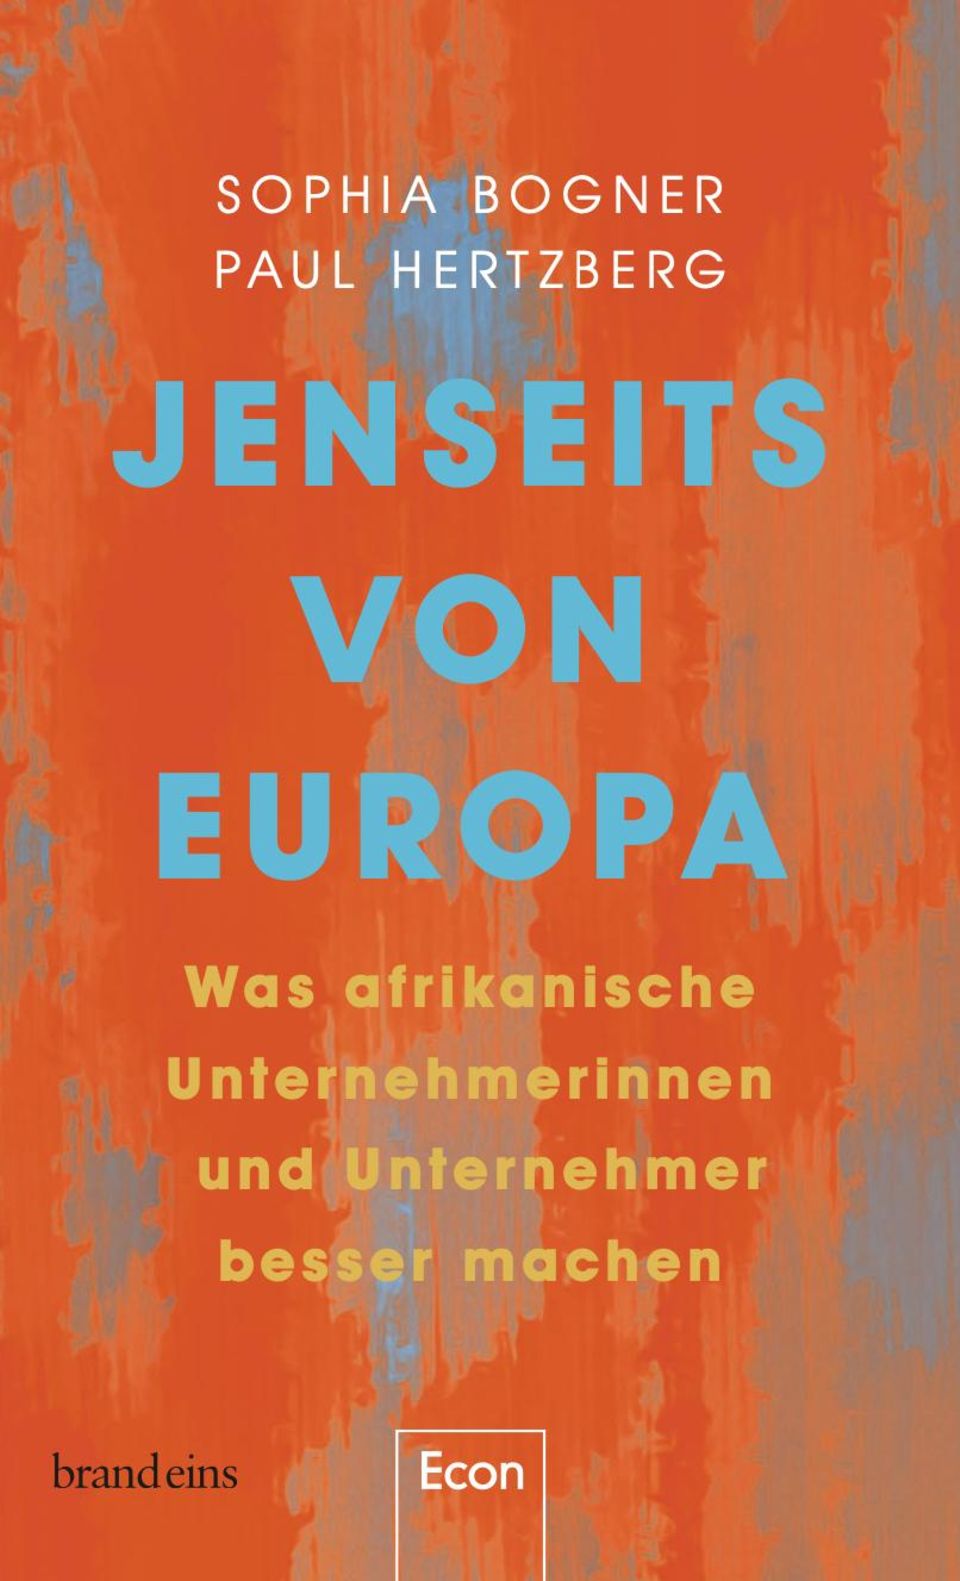 Sophia Bogner, Paul Hertzberg: Jenseits von Europa, Econ, 240 Seiten, 24,99 Euro